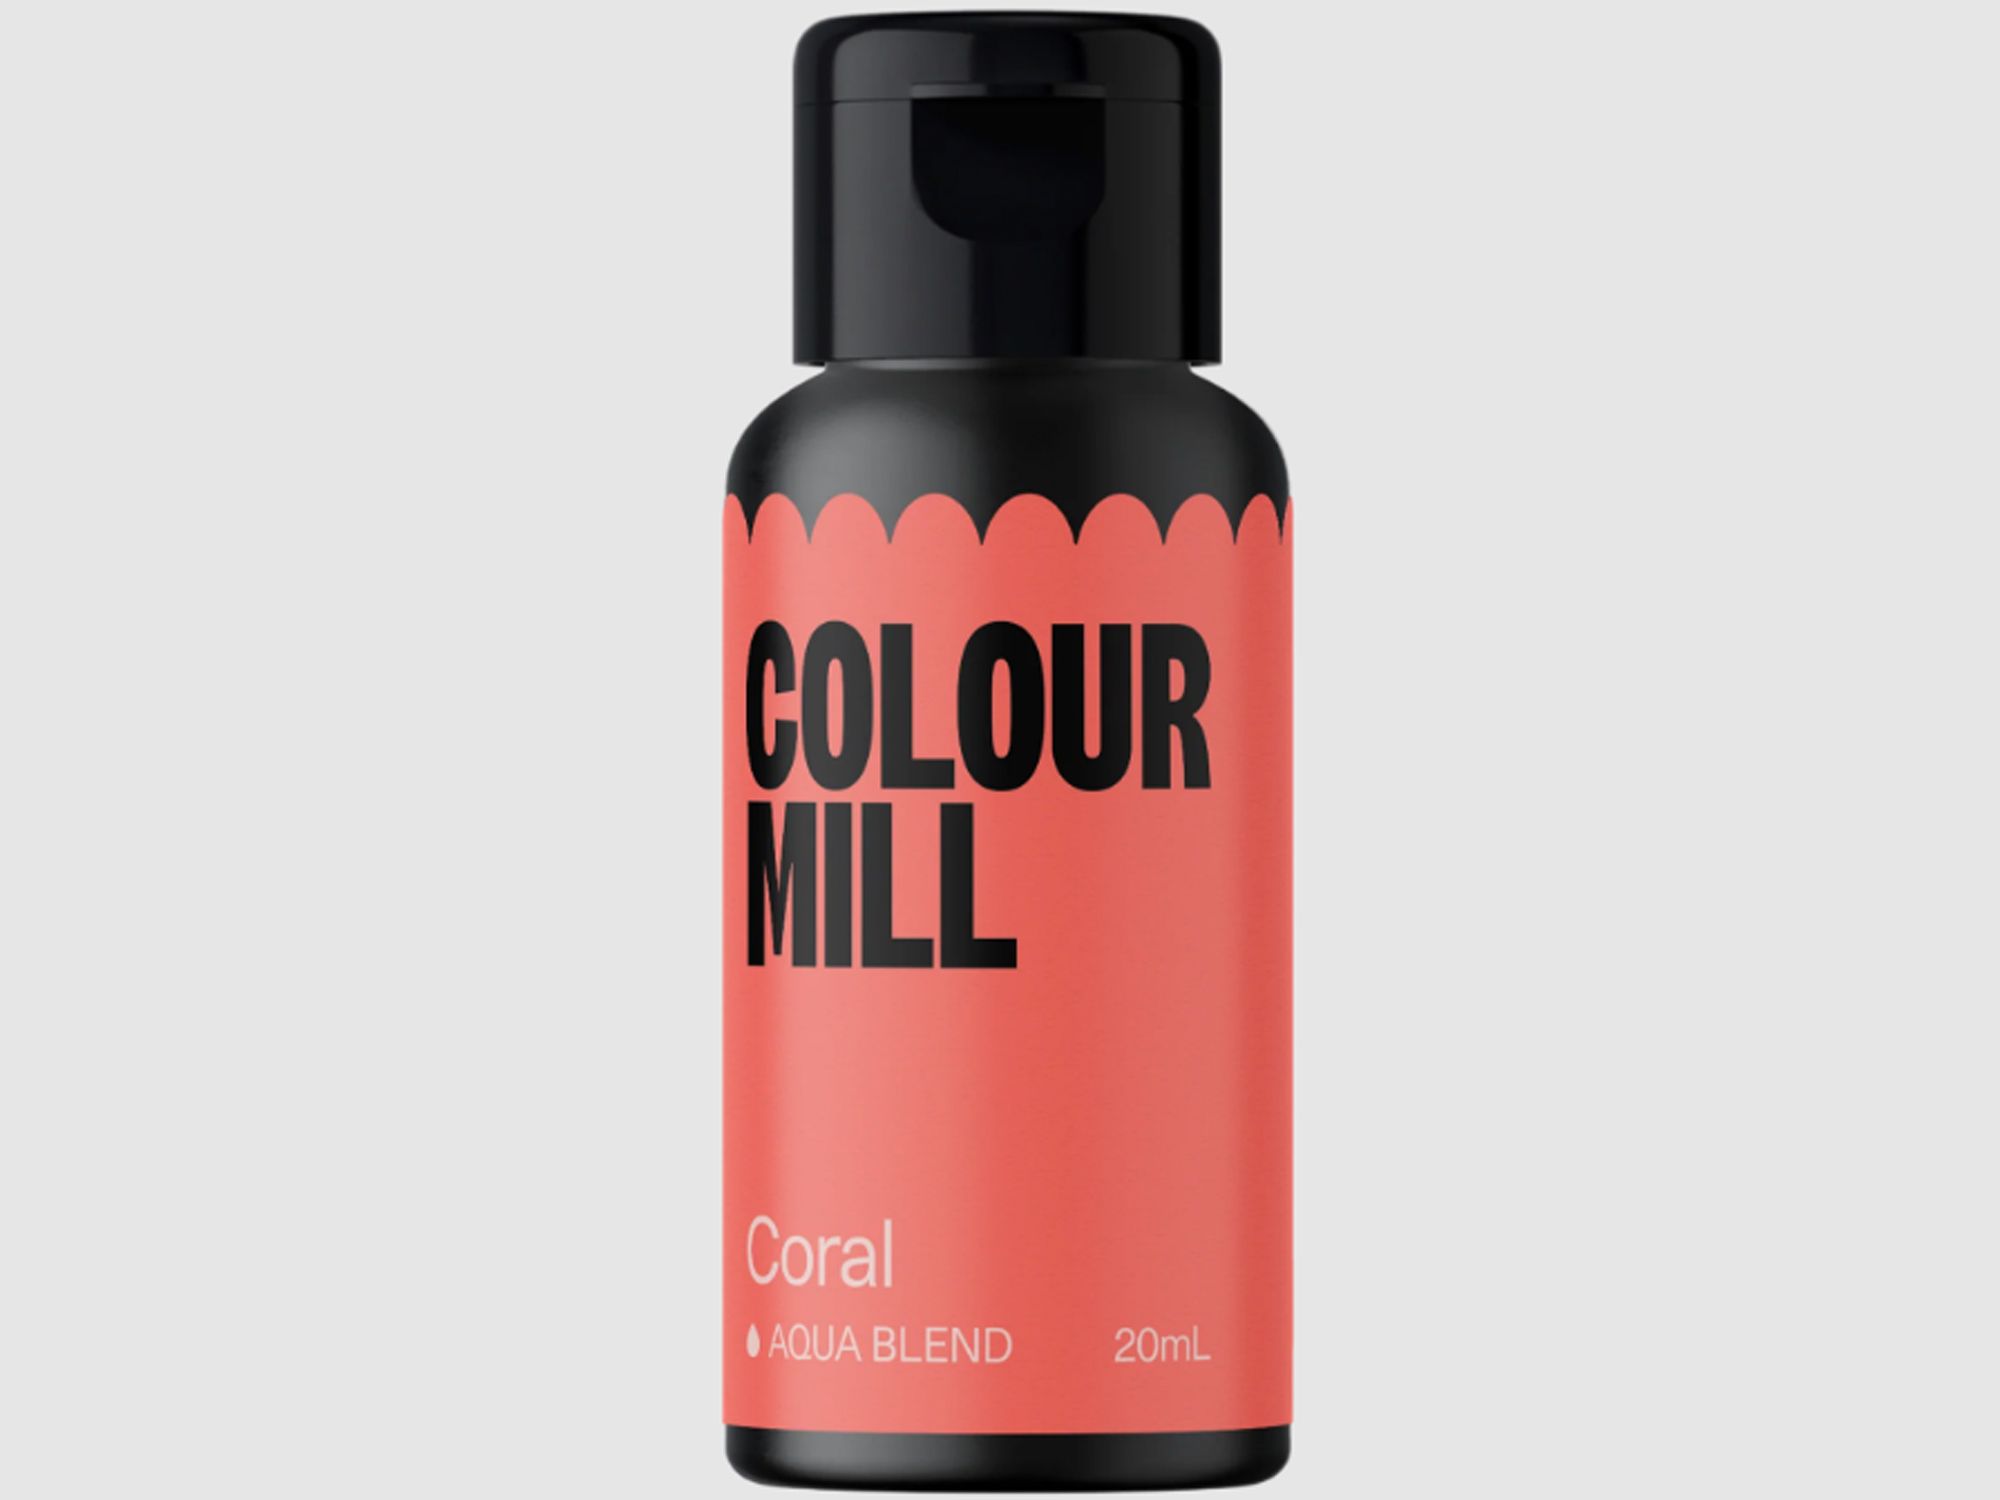 Colour Mill Coral (Aqua Blend) 20ml